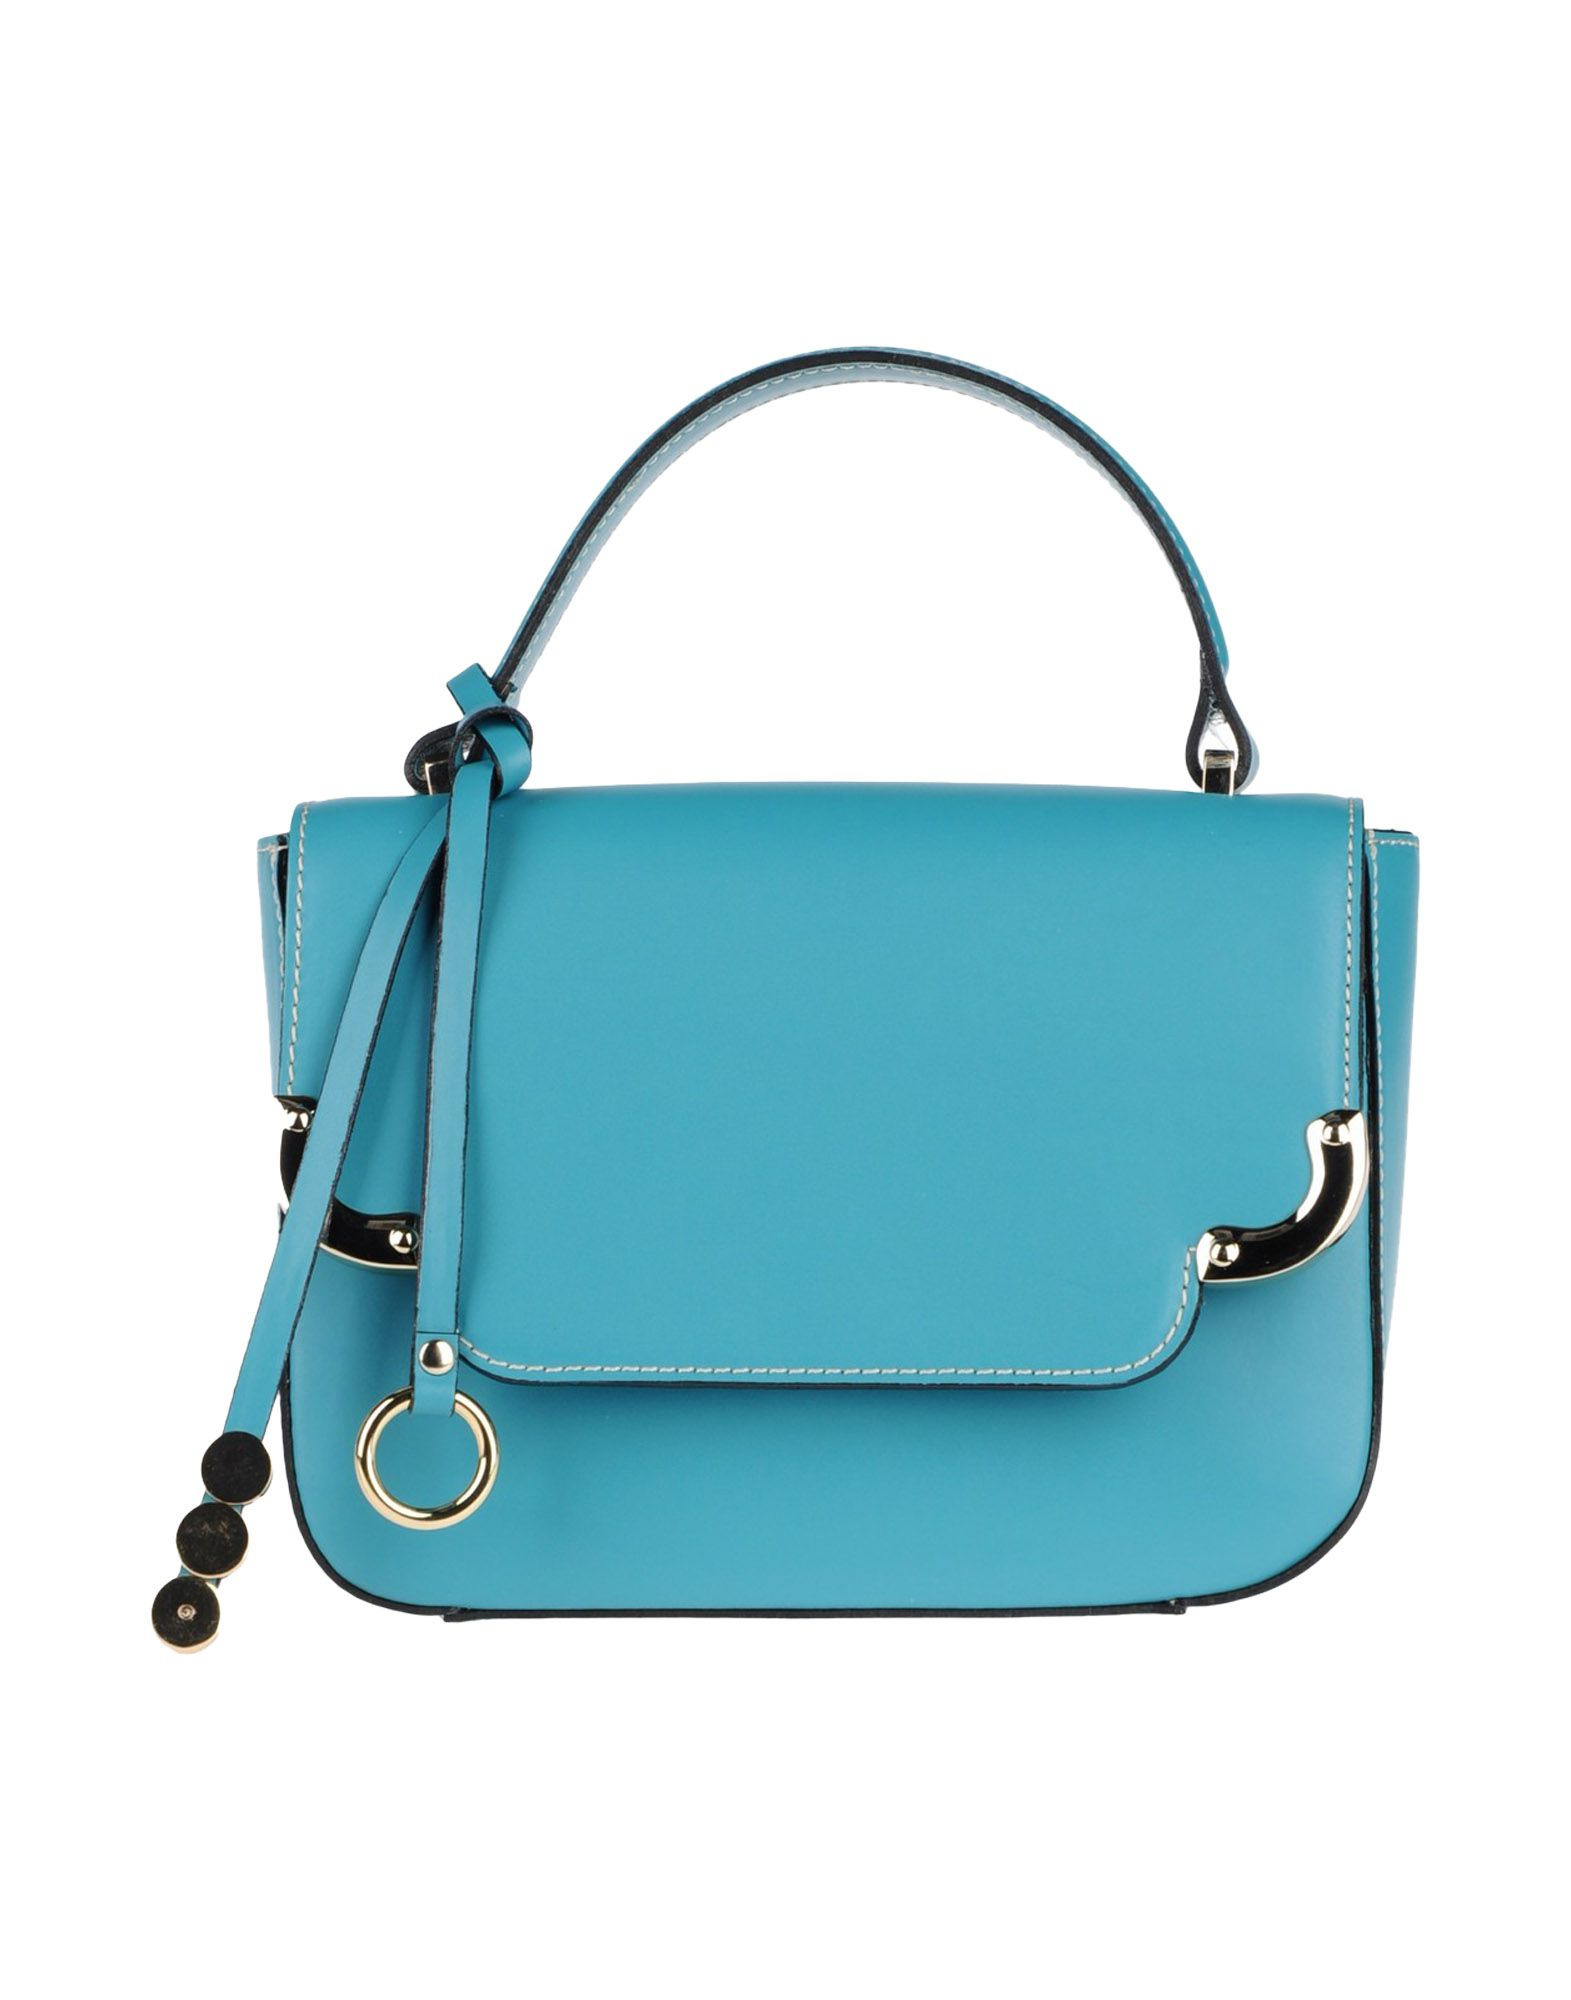 Lyst - Ab Asia Bellucci Medium Leather Bag in Blue